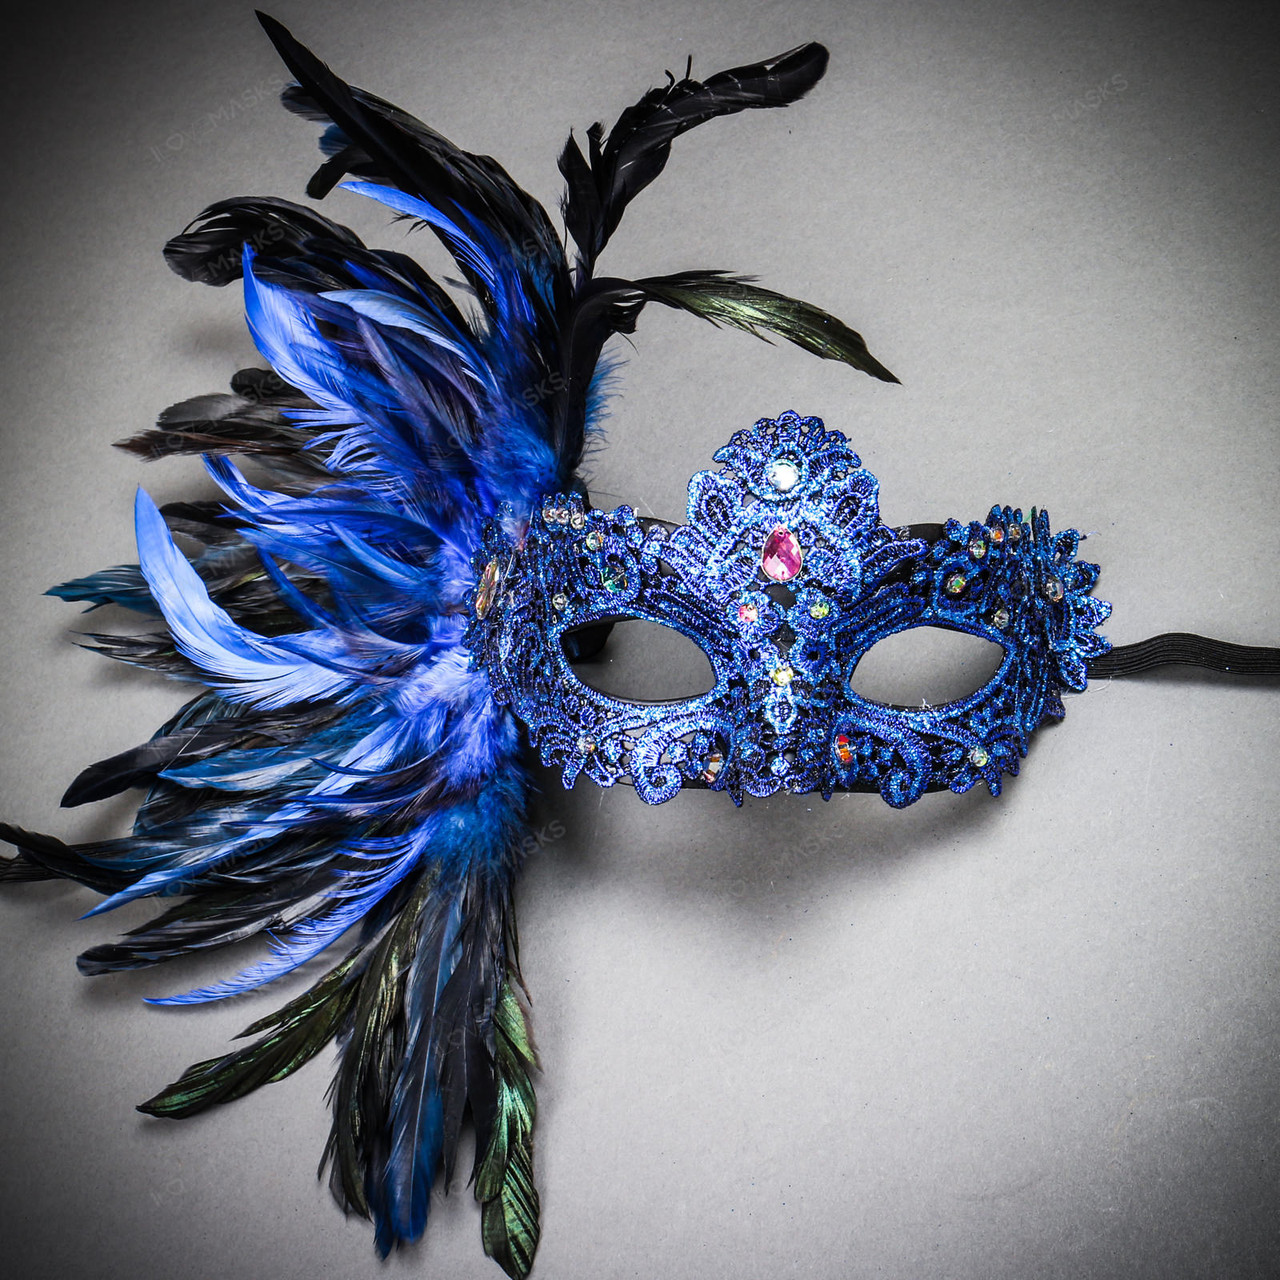 Masquerade Mask, Mask, Luxury Masquerade Ball Mask, Silver Masquerade Mask,  Venetian Masquerade Mask silver Black 